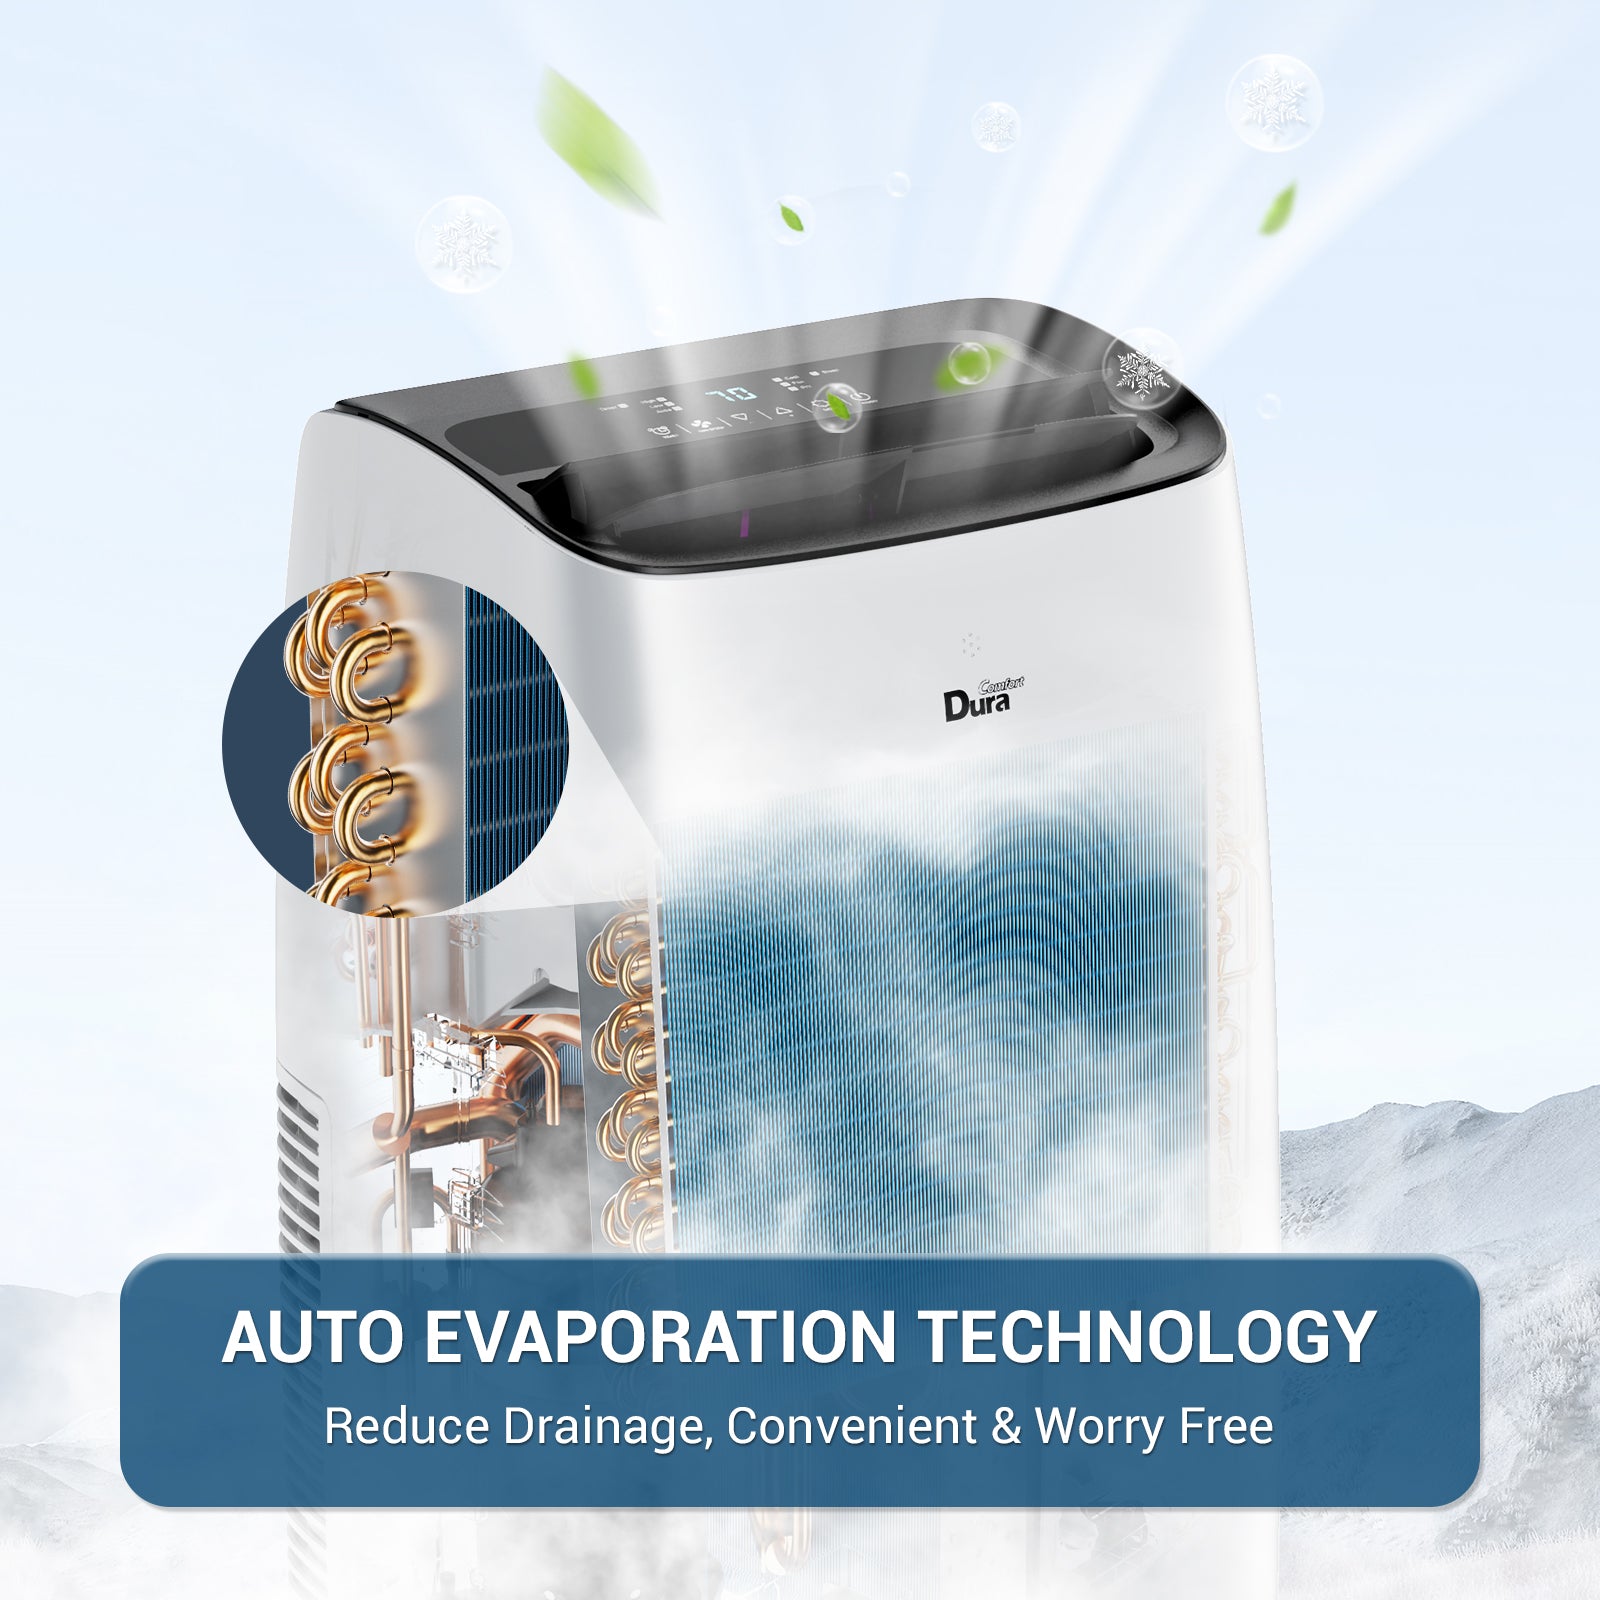 Duracomfort Portable Air Conditioners Unit 10200btu(14000 BTU Ashrae), Dehumidifier, Cooling, Fan, Remote Control, 450 Sq. ft, Size: 14000 BTU(Ashrae)